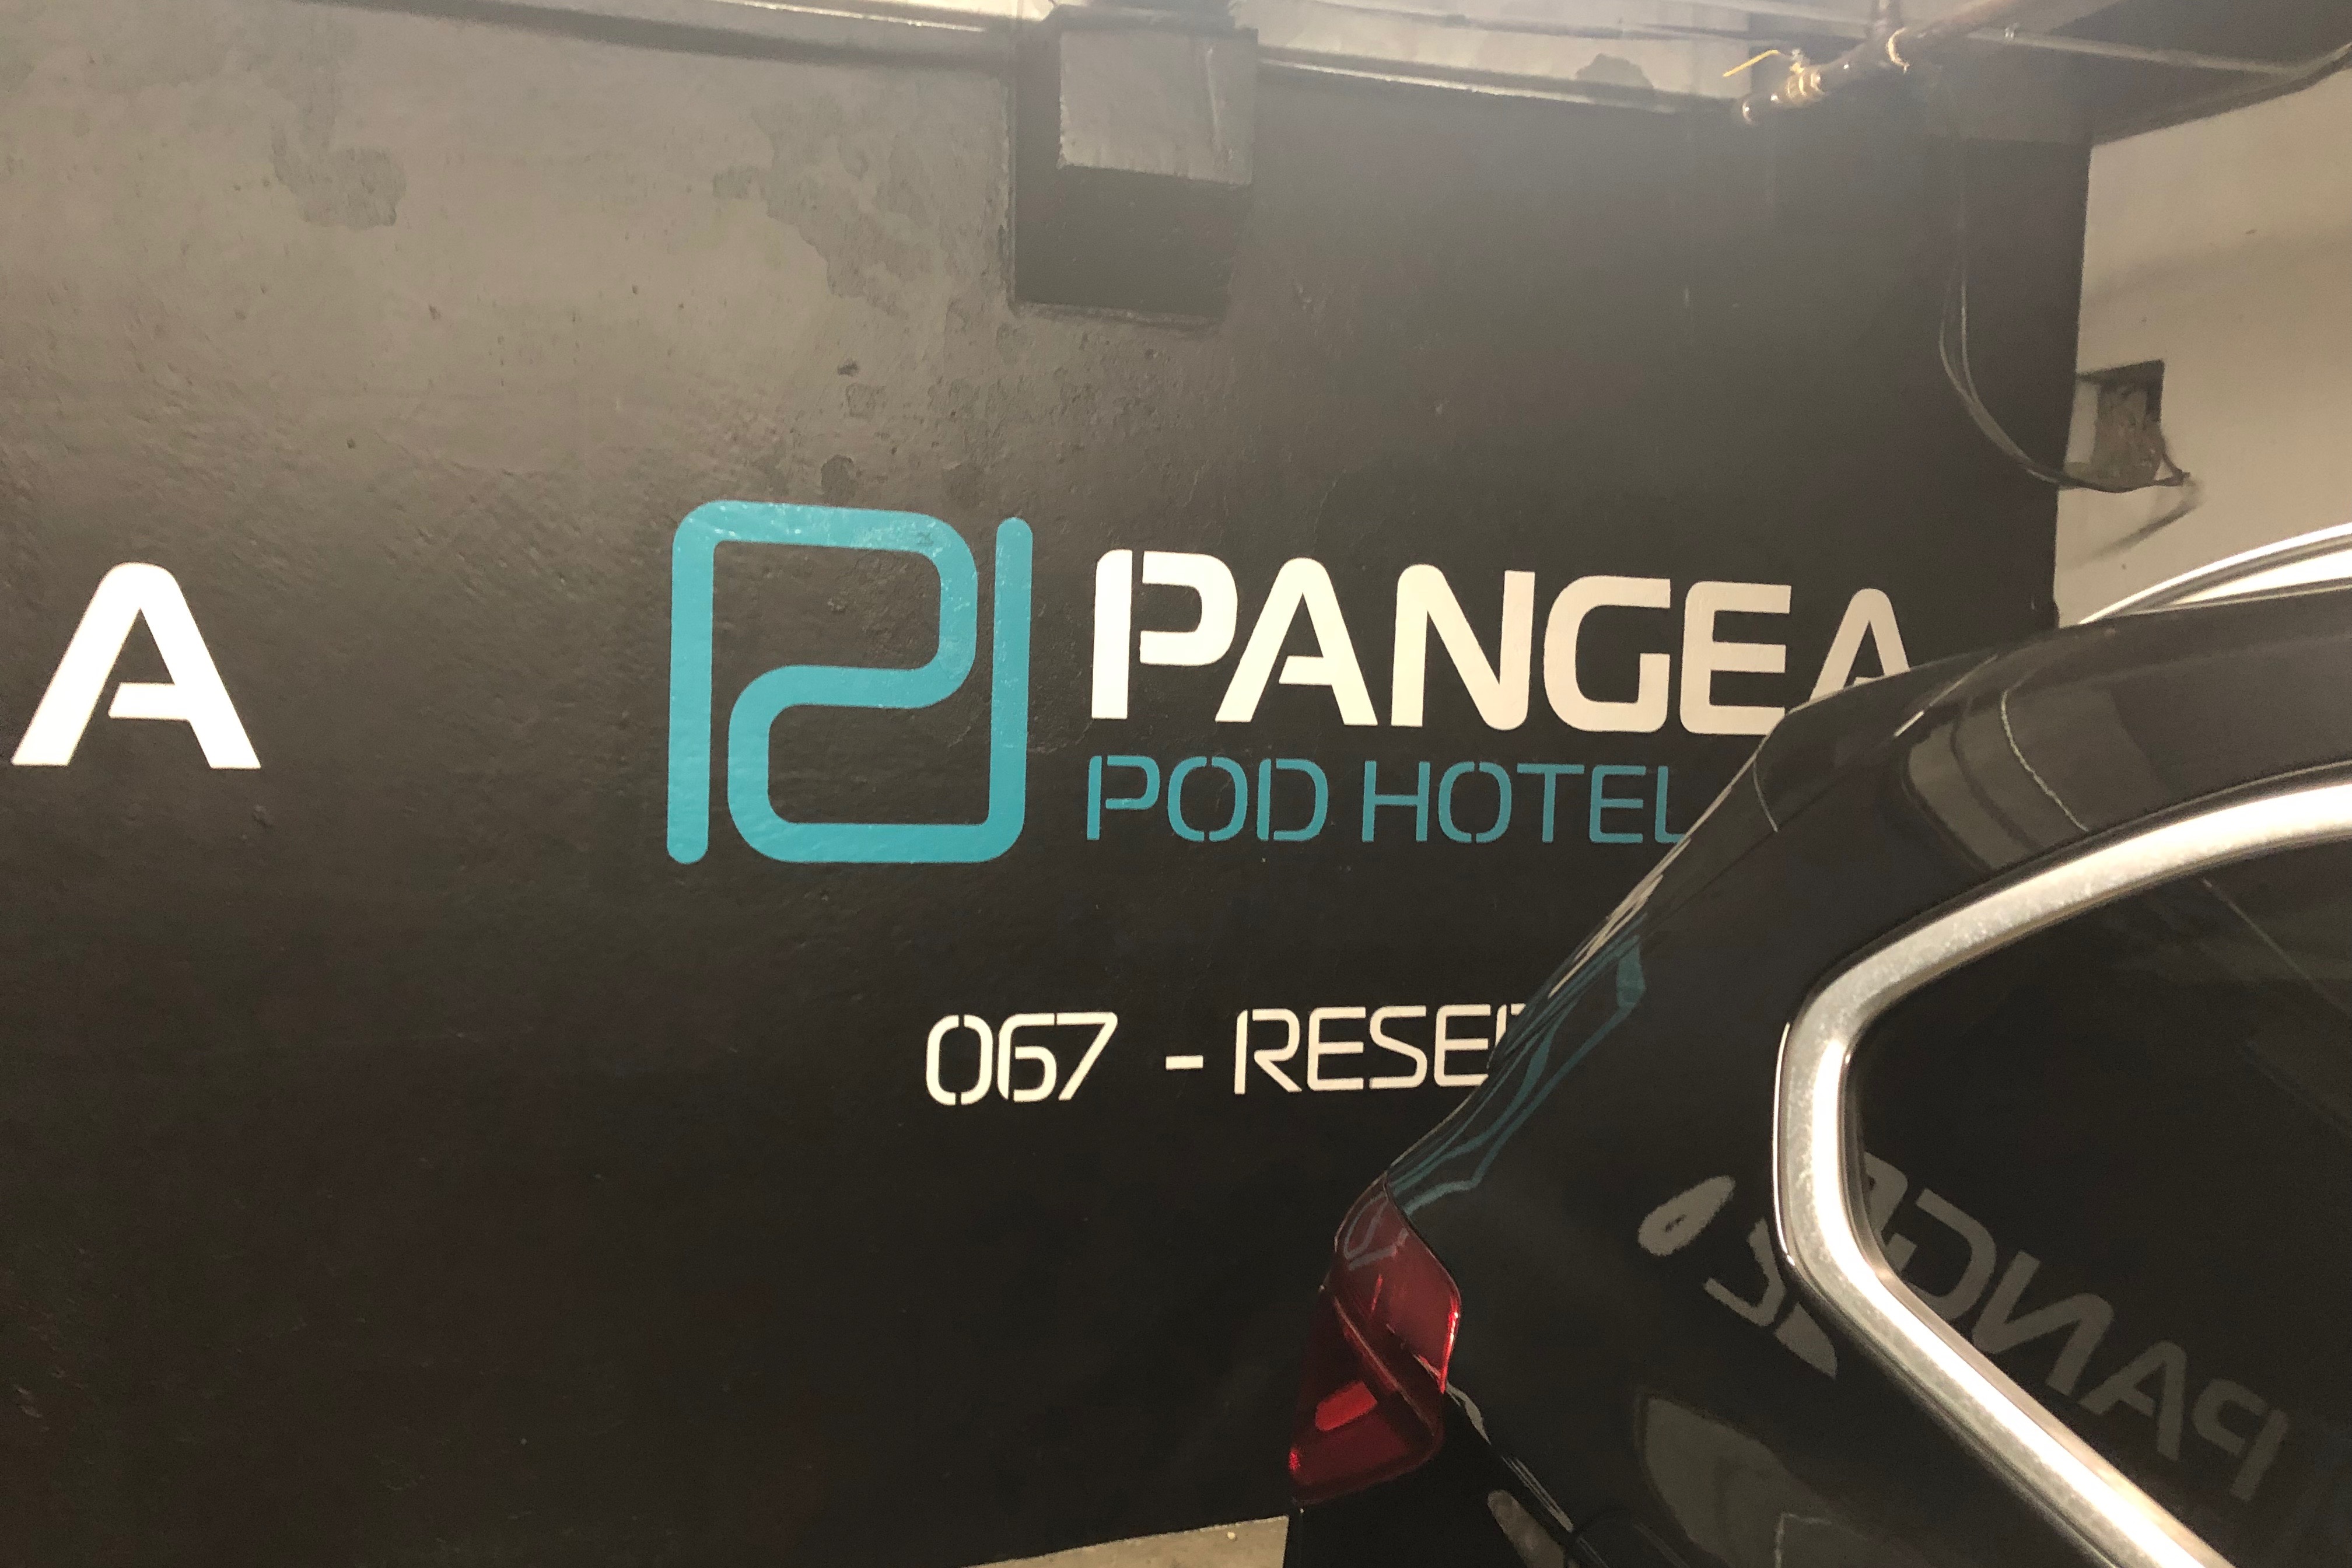 Parking at Pangea Pod Hotel